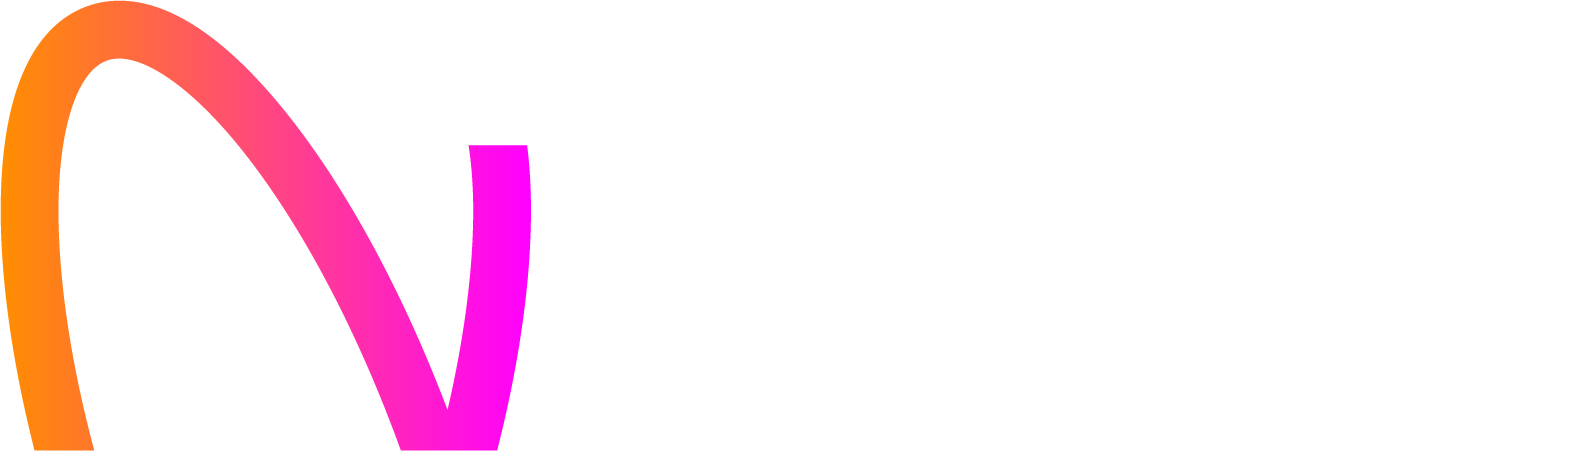 Nityda Telecom